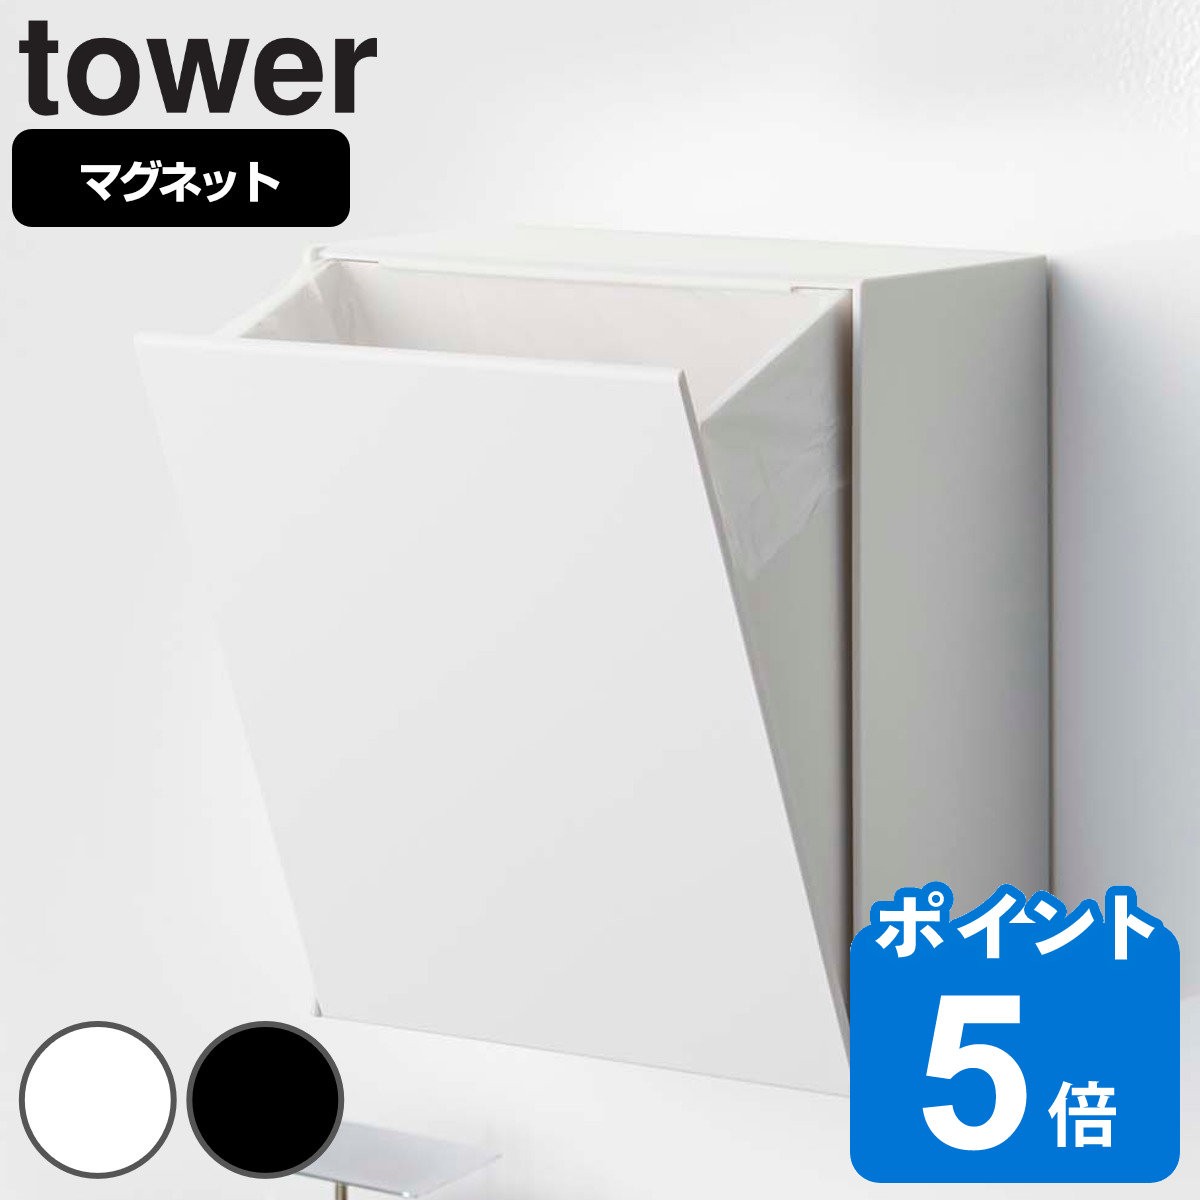 tower }Olbg_Xg{bNX[P[X ^[